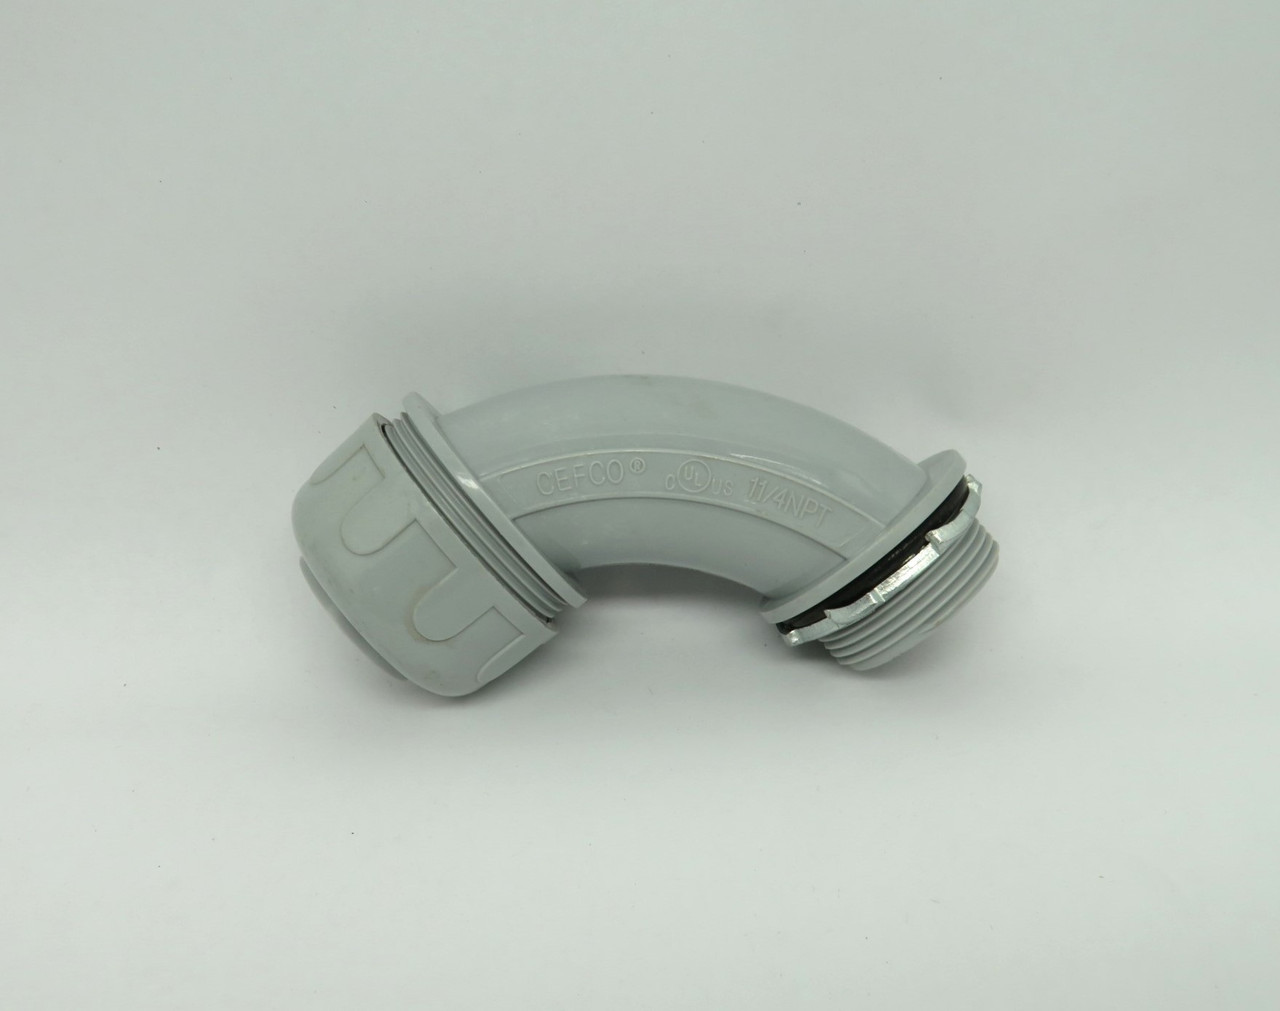 Cefco FNMC-B Plastic 1-1/4" 2-Piece 90 Degree Elbow Conduit Fitting USED